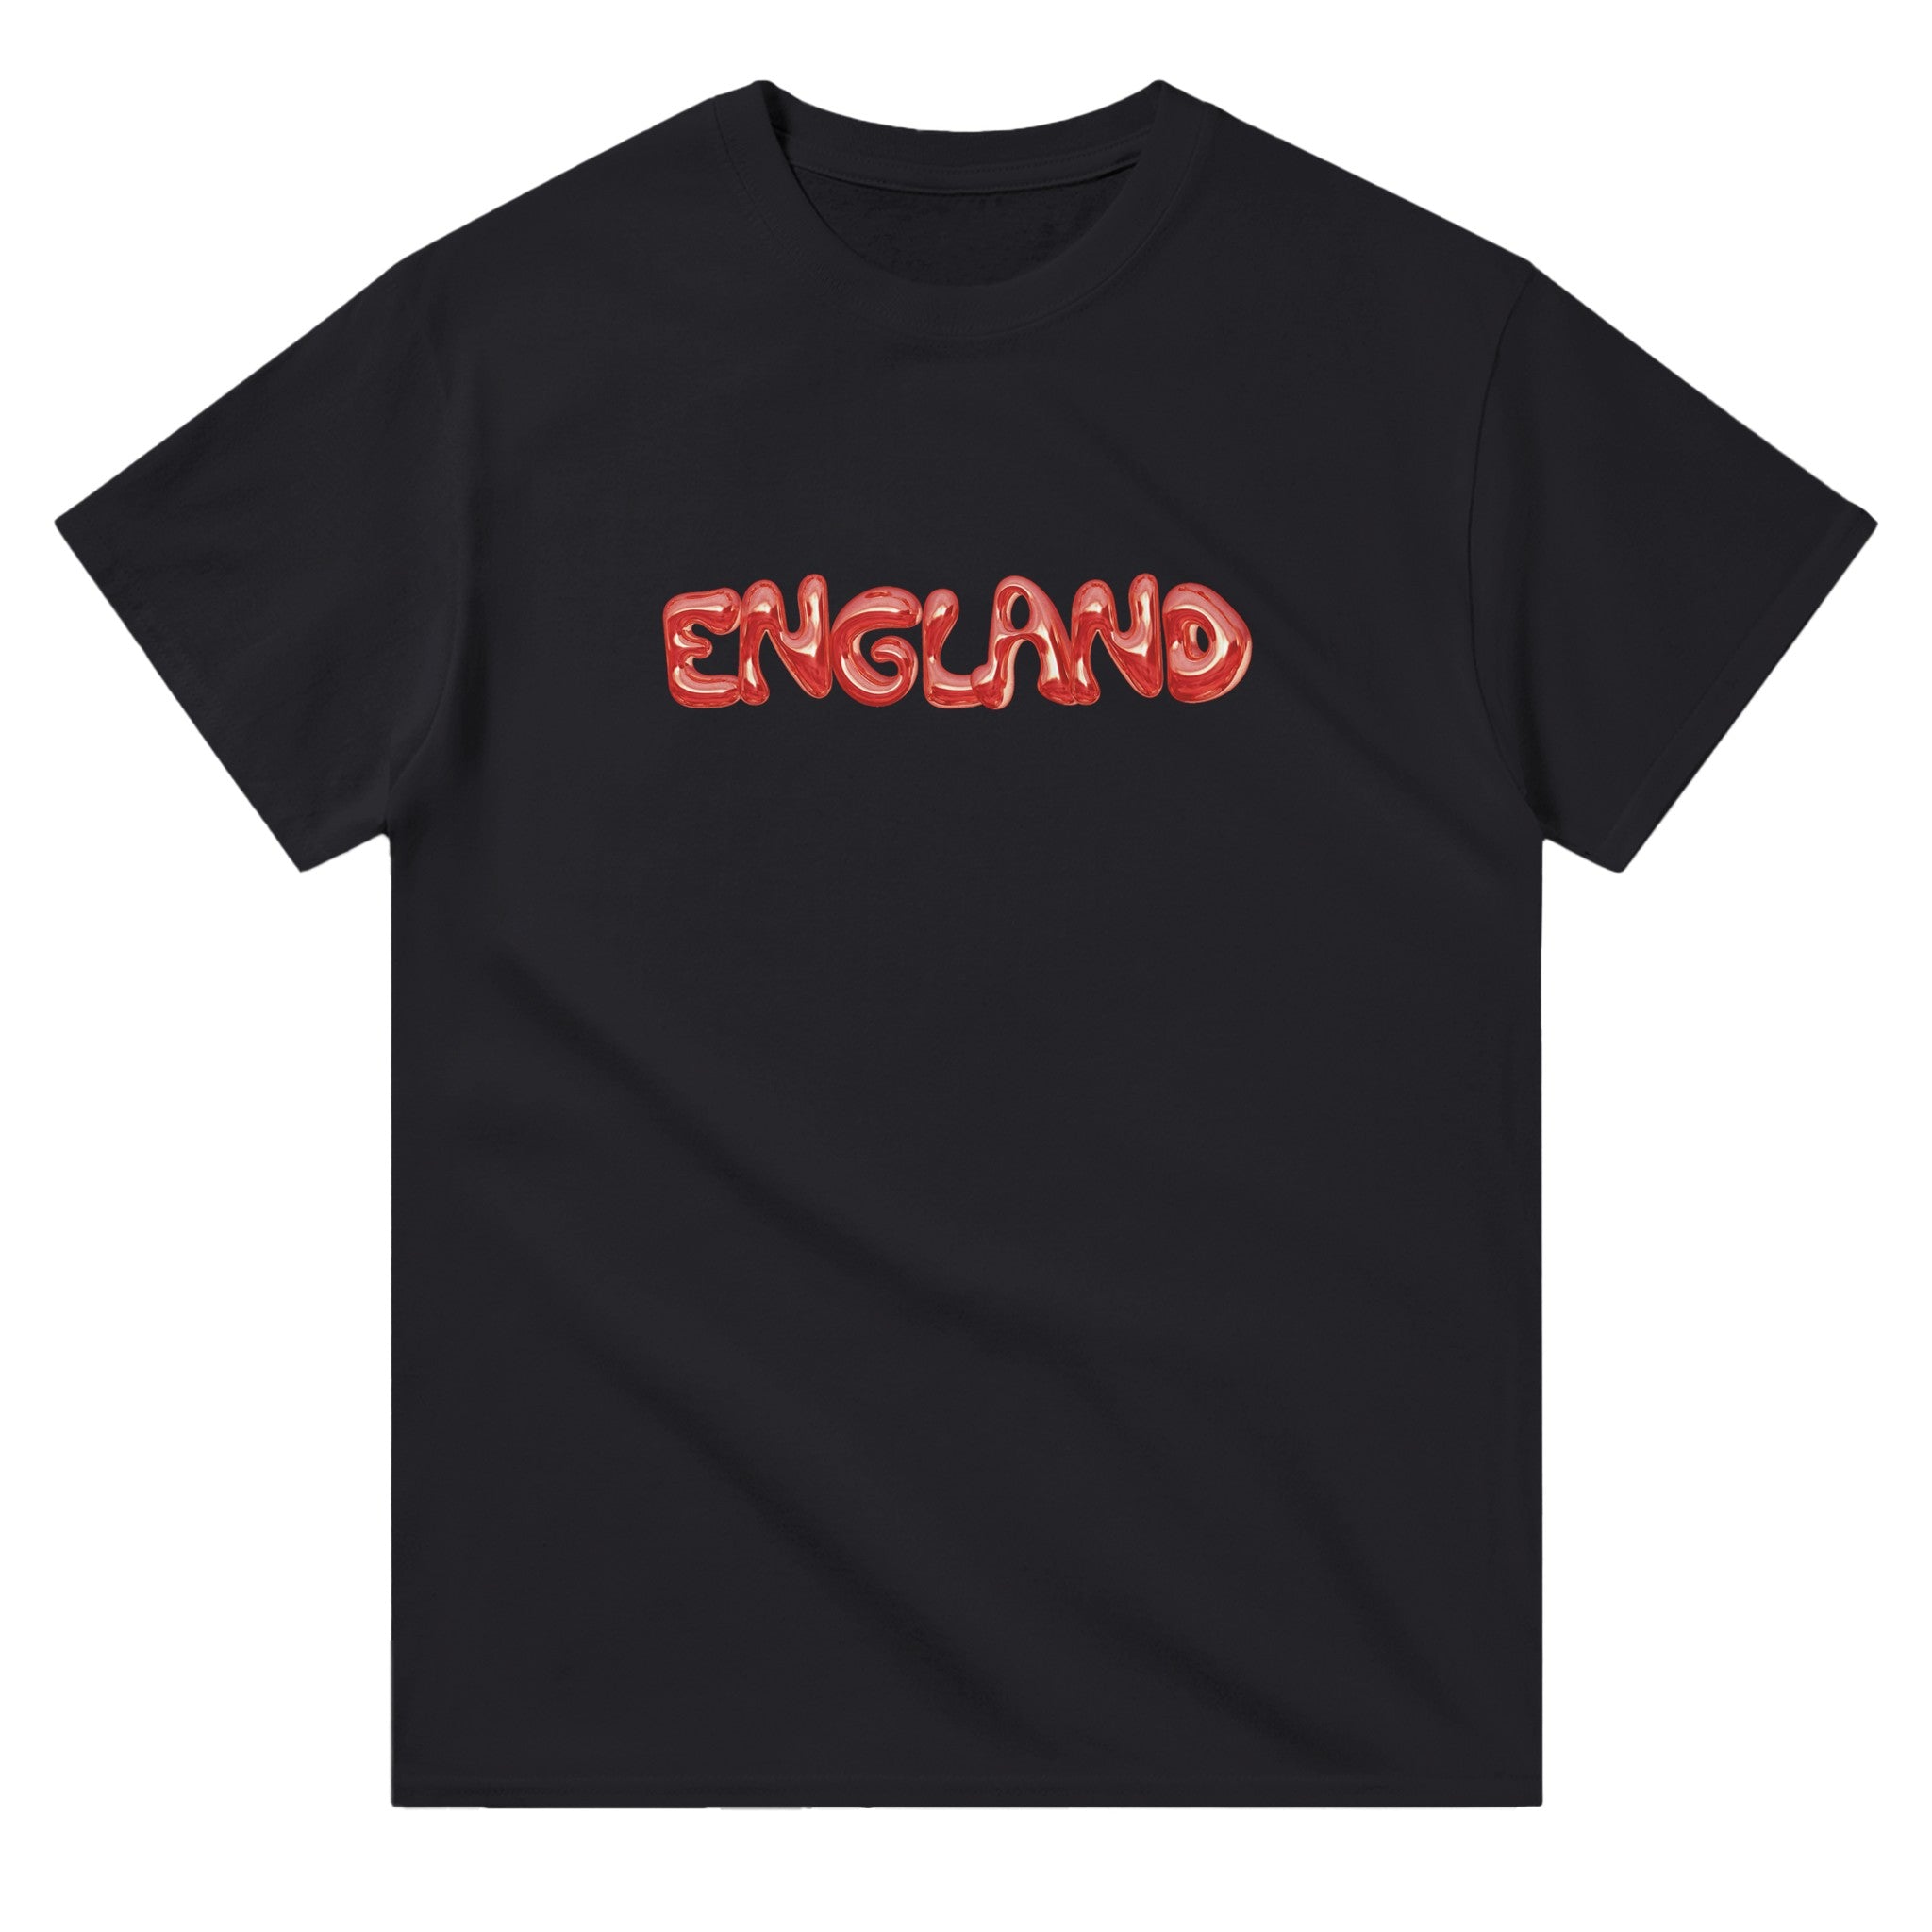 'England' classic tee - In Print We Trust